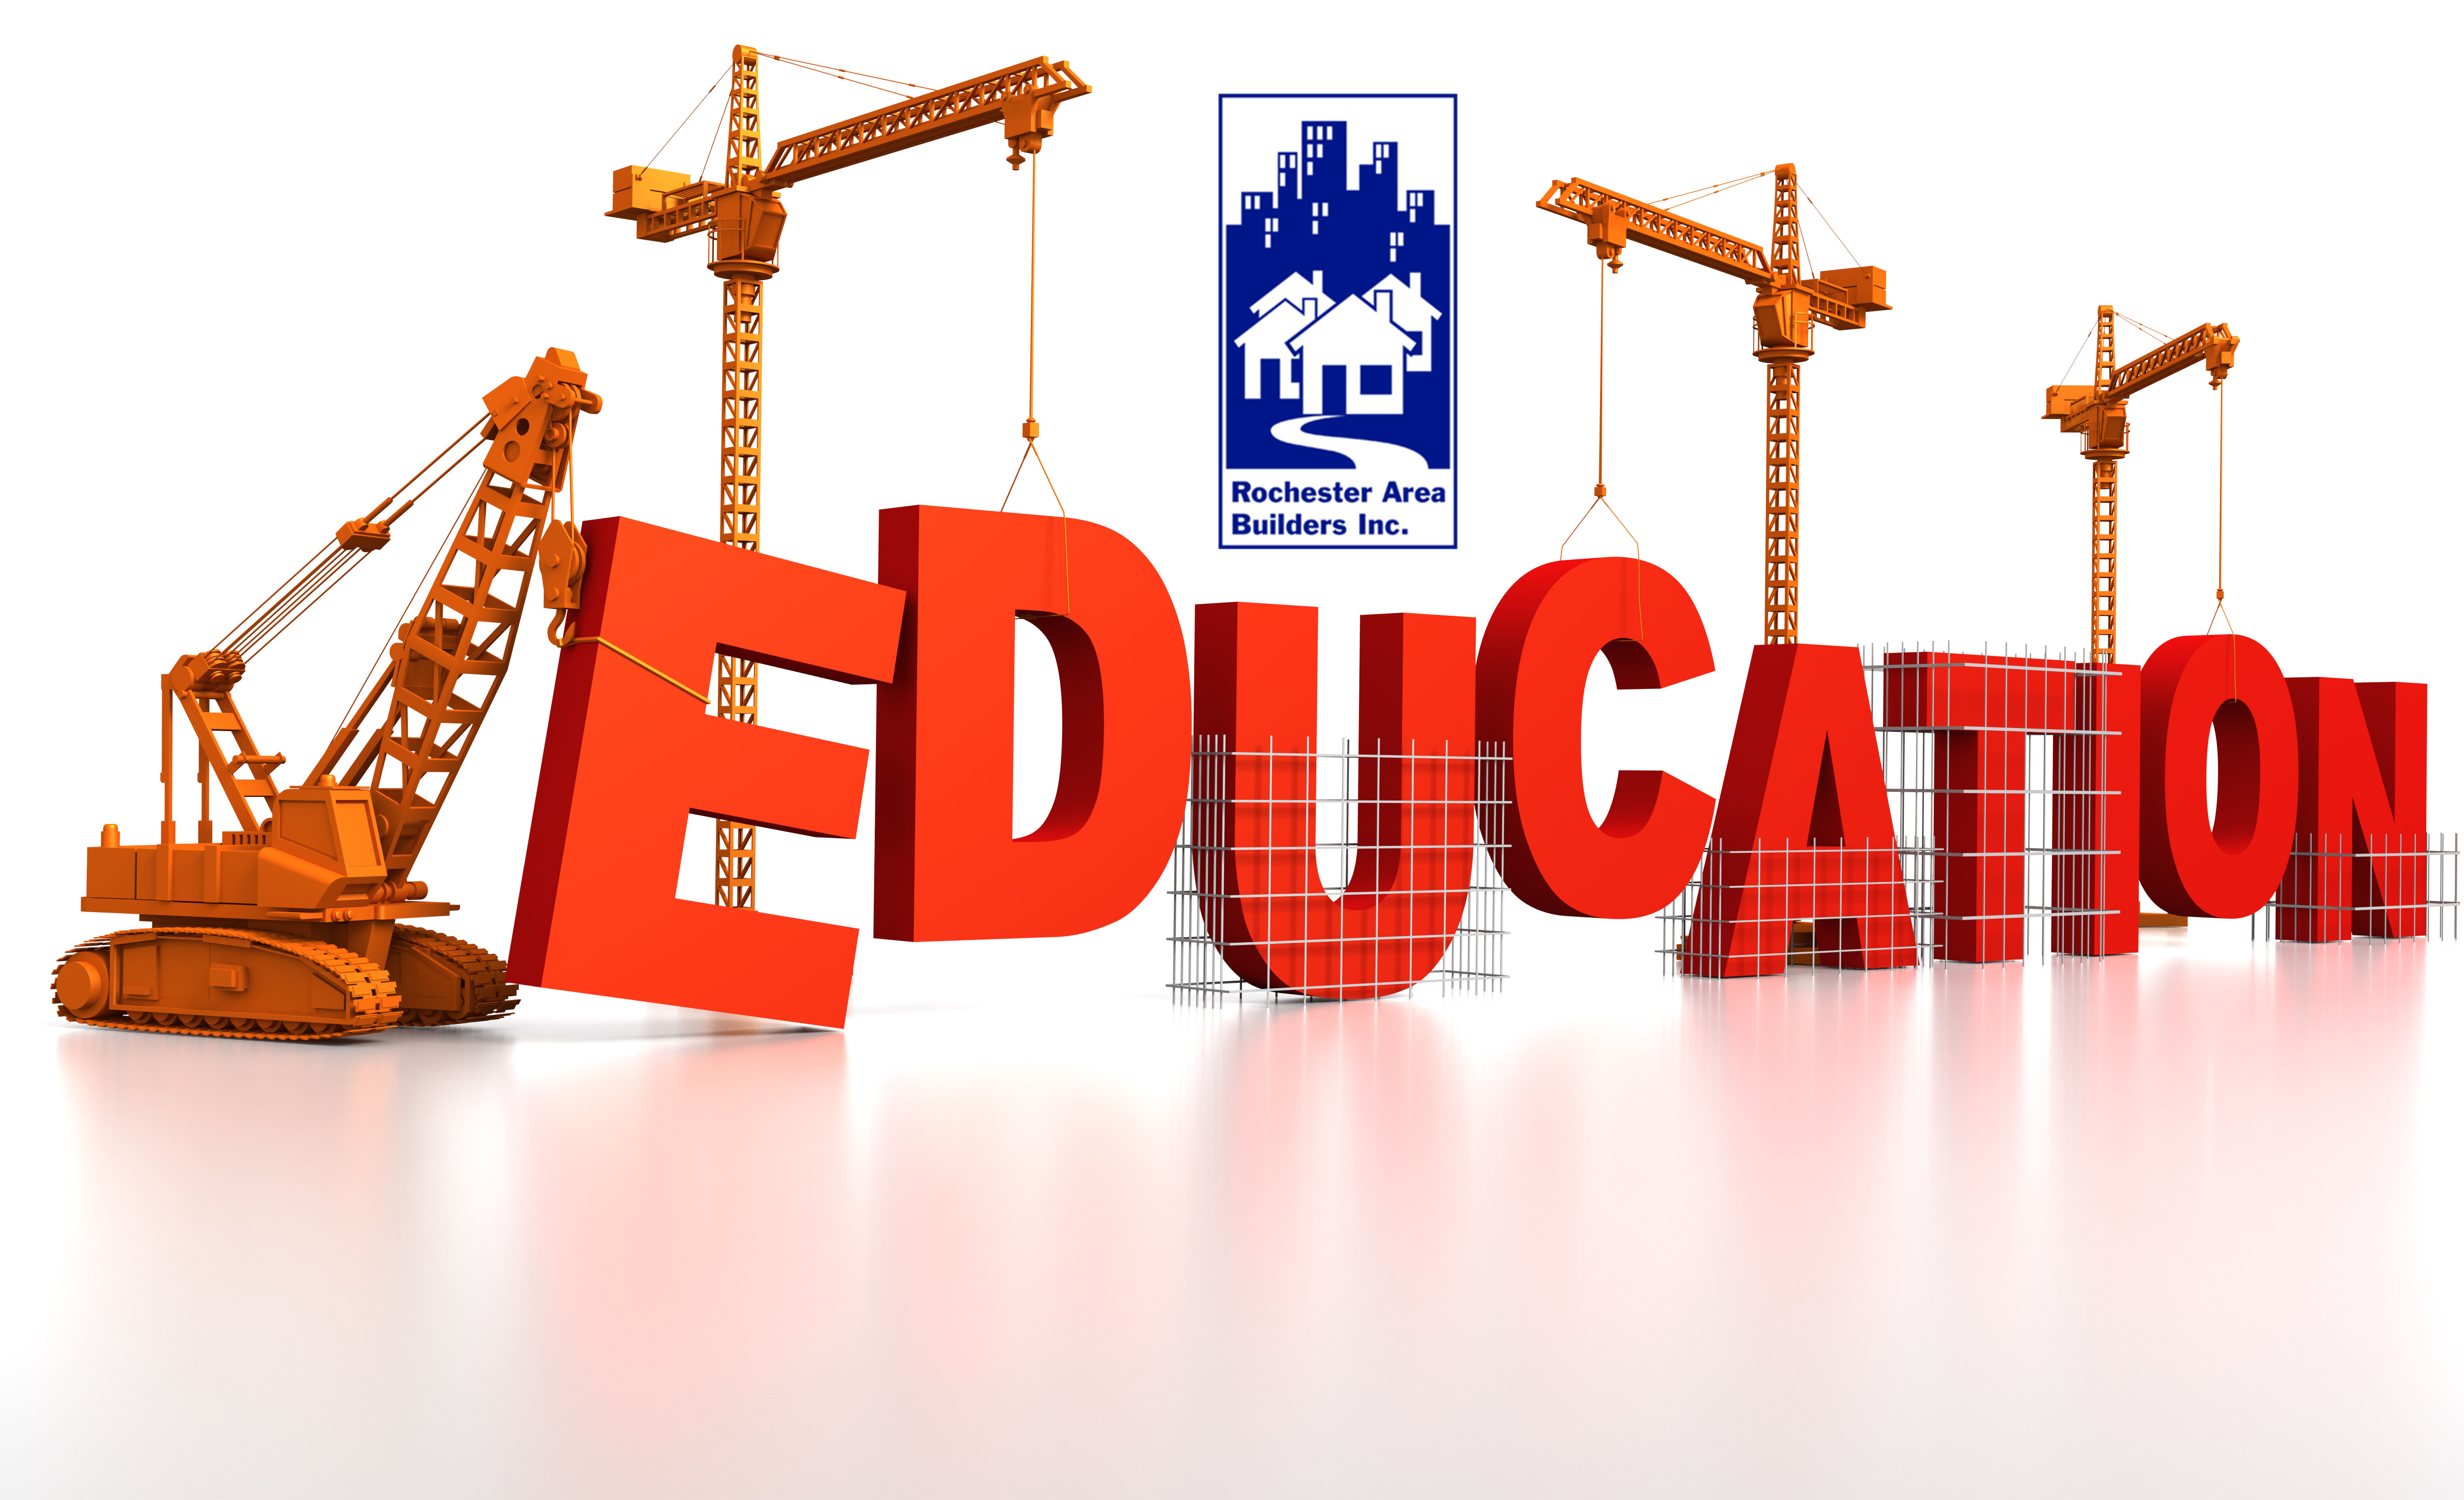 Continuing Education logo